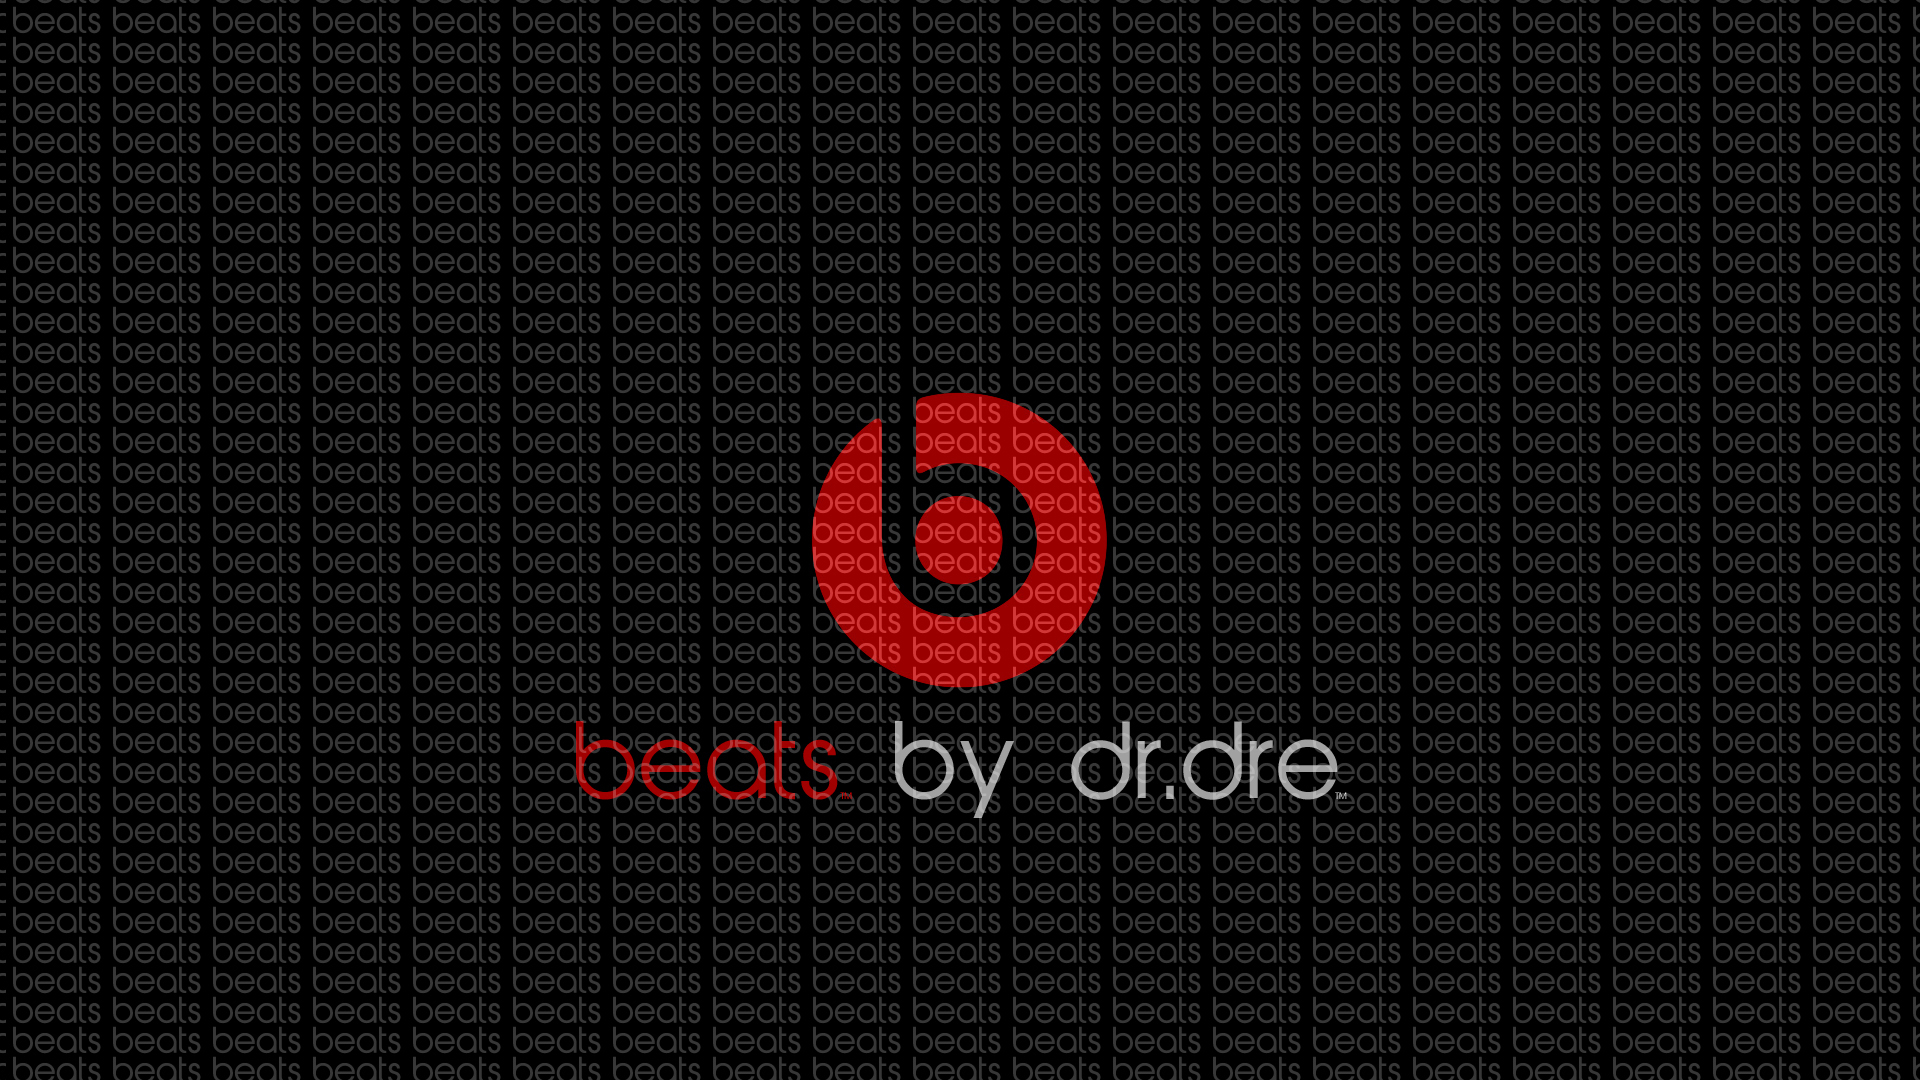 Beats By Dr Dre Audio Brand Logo Sound Texture Sits